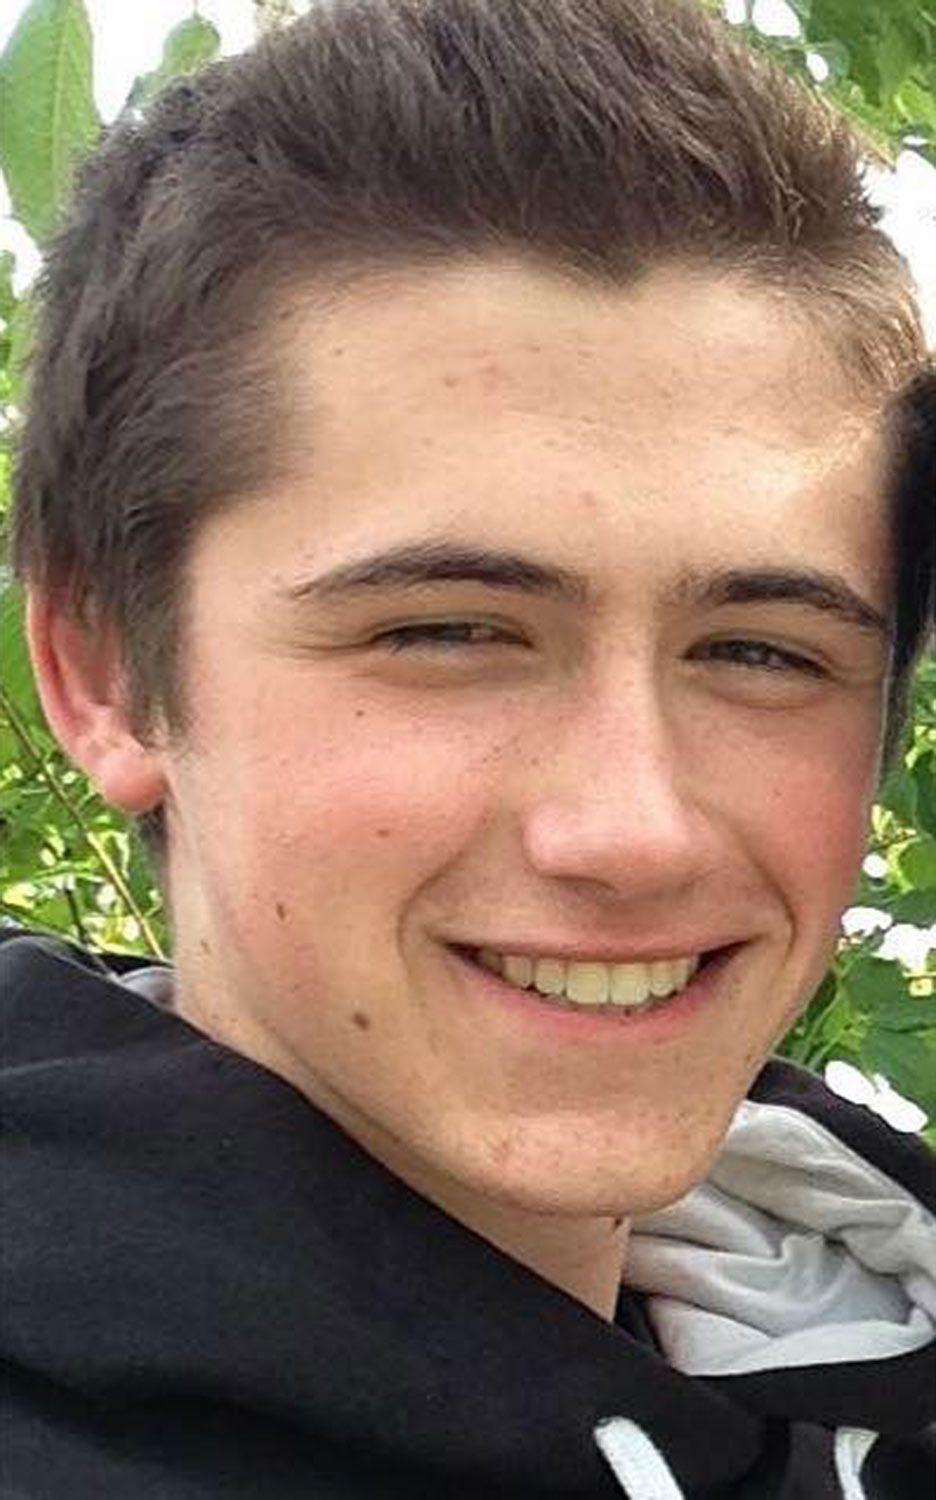 Missing Alaska Teen David Grunwald Killed for Smoking Friend's Weed: Police  | PEOPLE.com